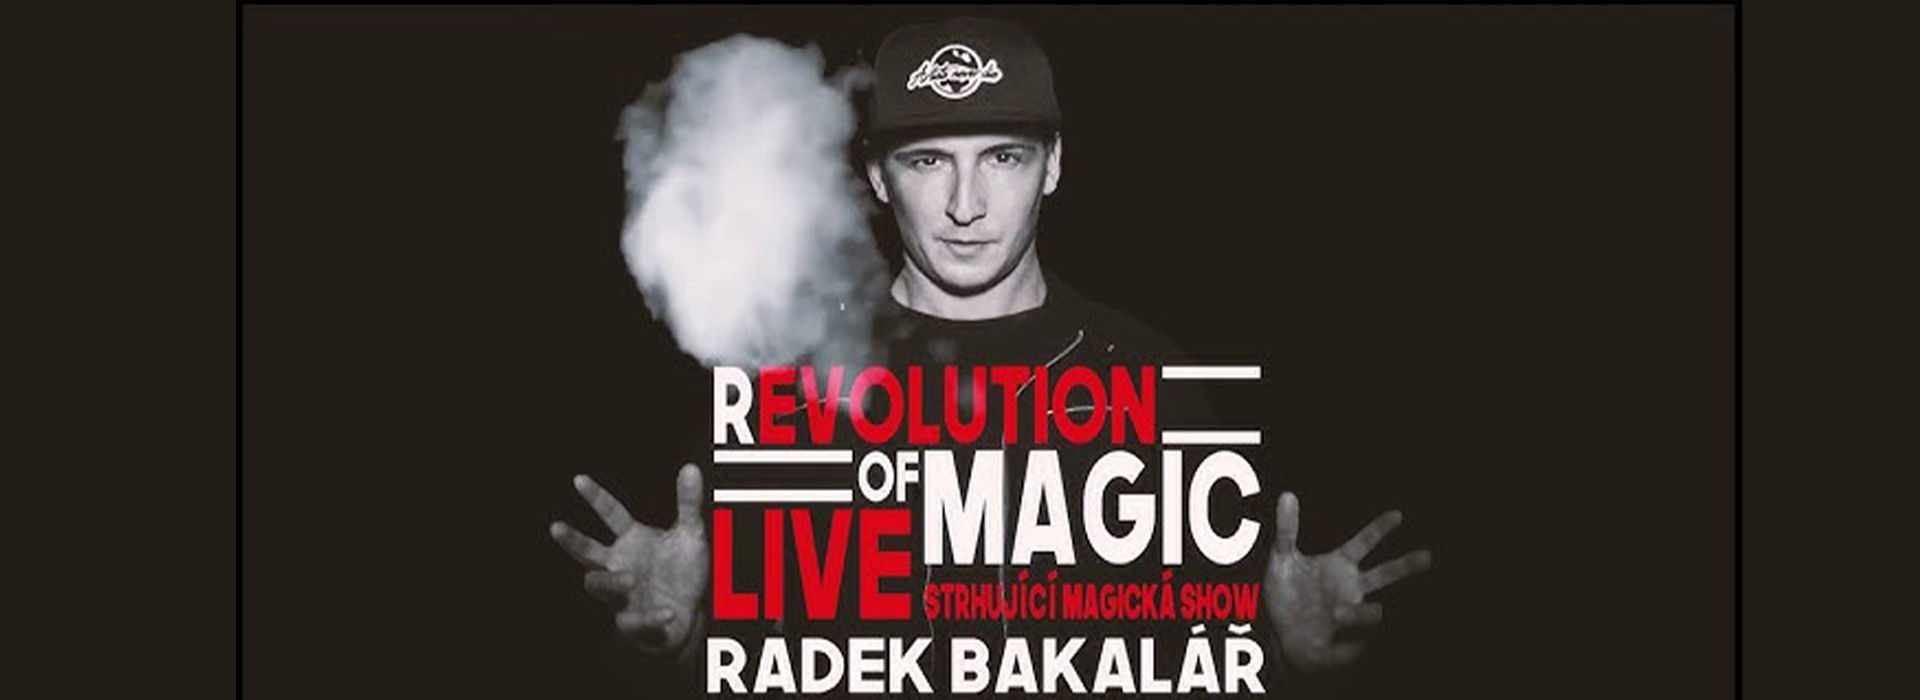 RADEK BAKALÁŘ – Revolution Of Magic